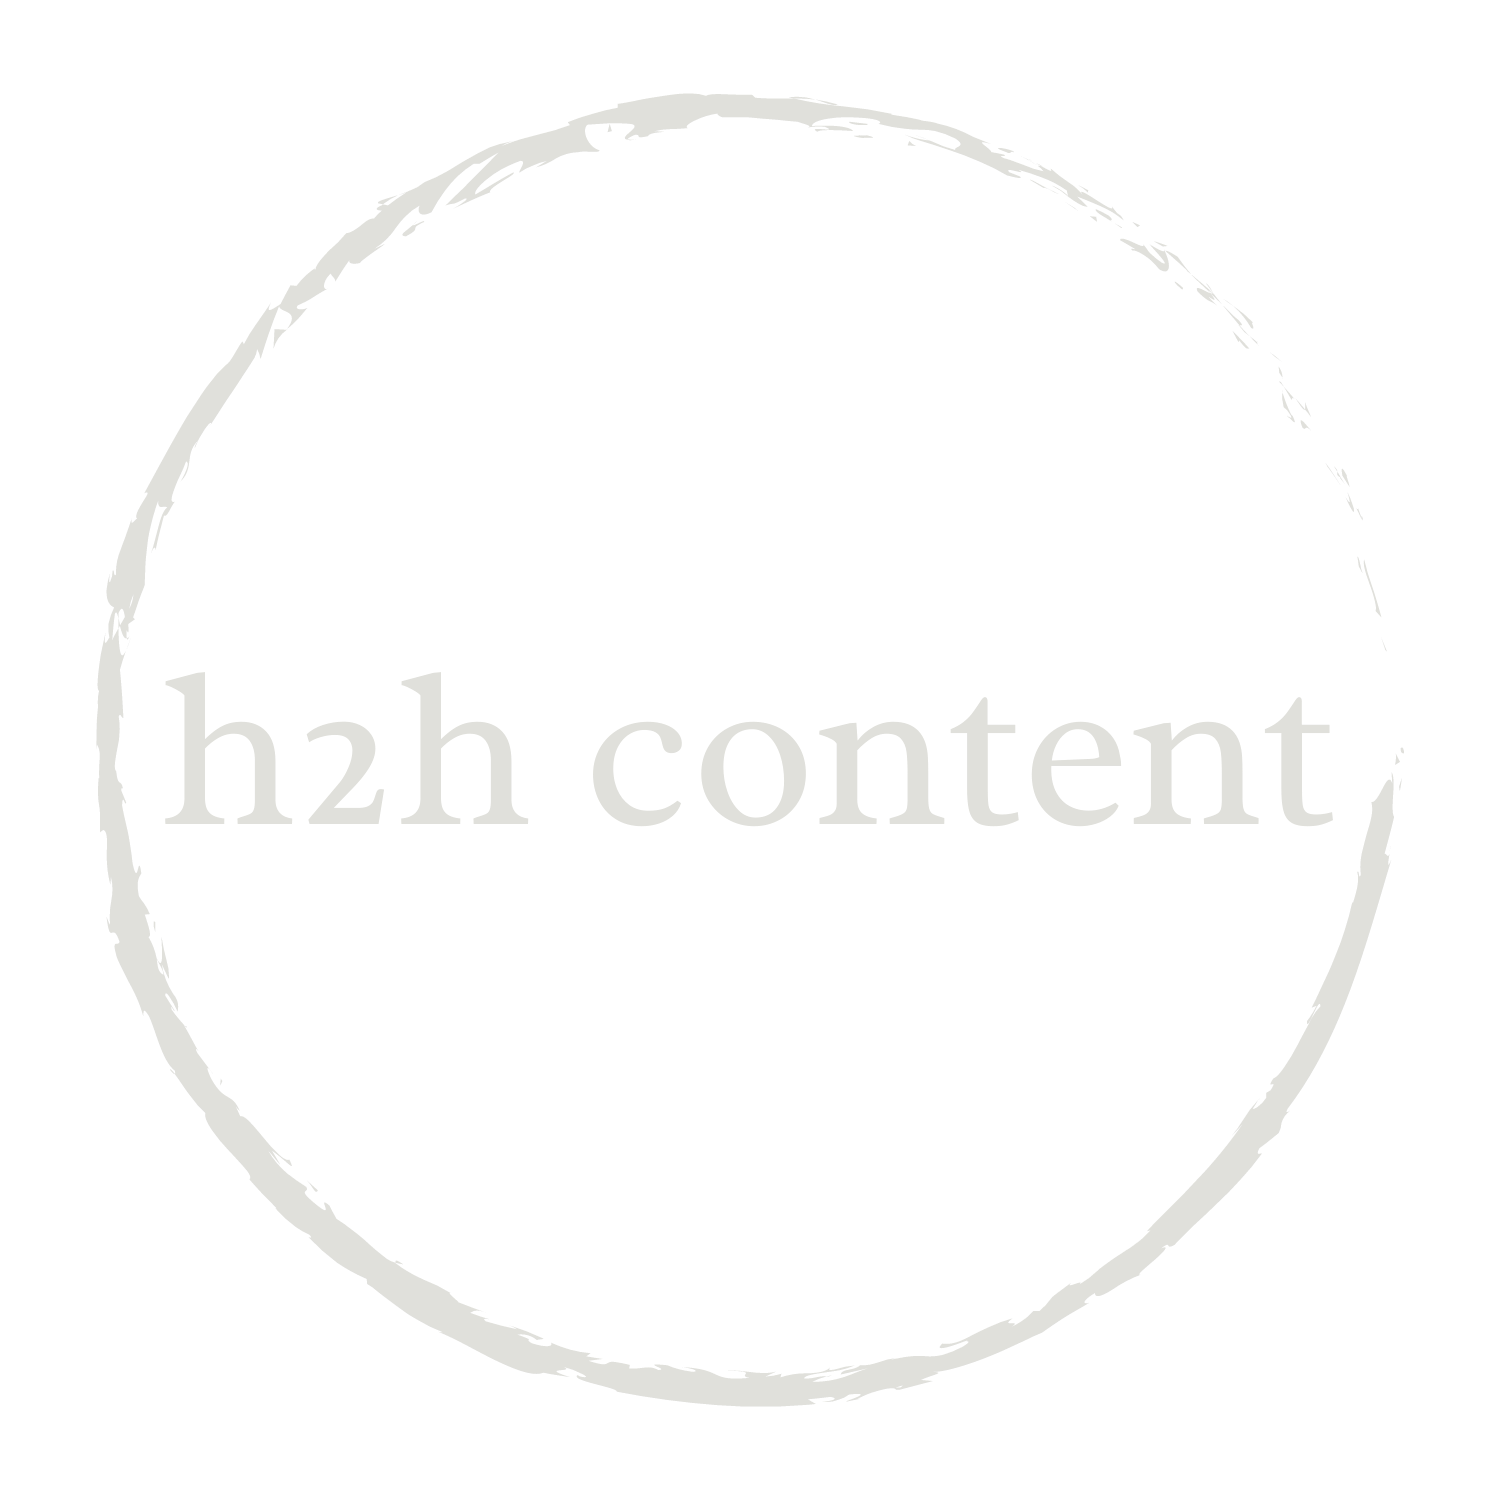 h2h content